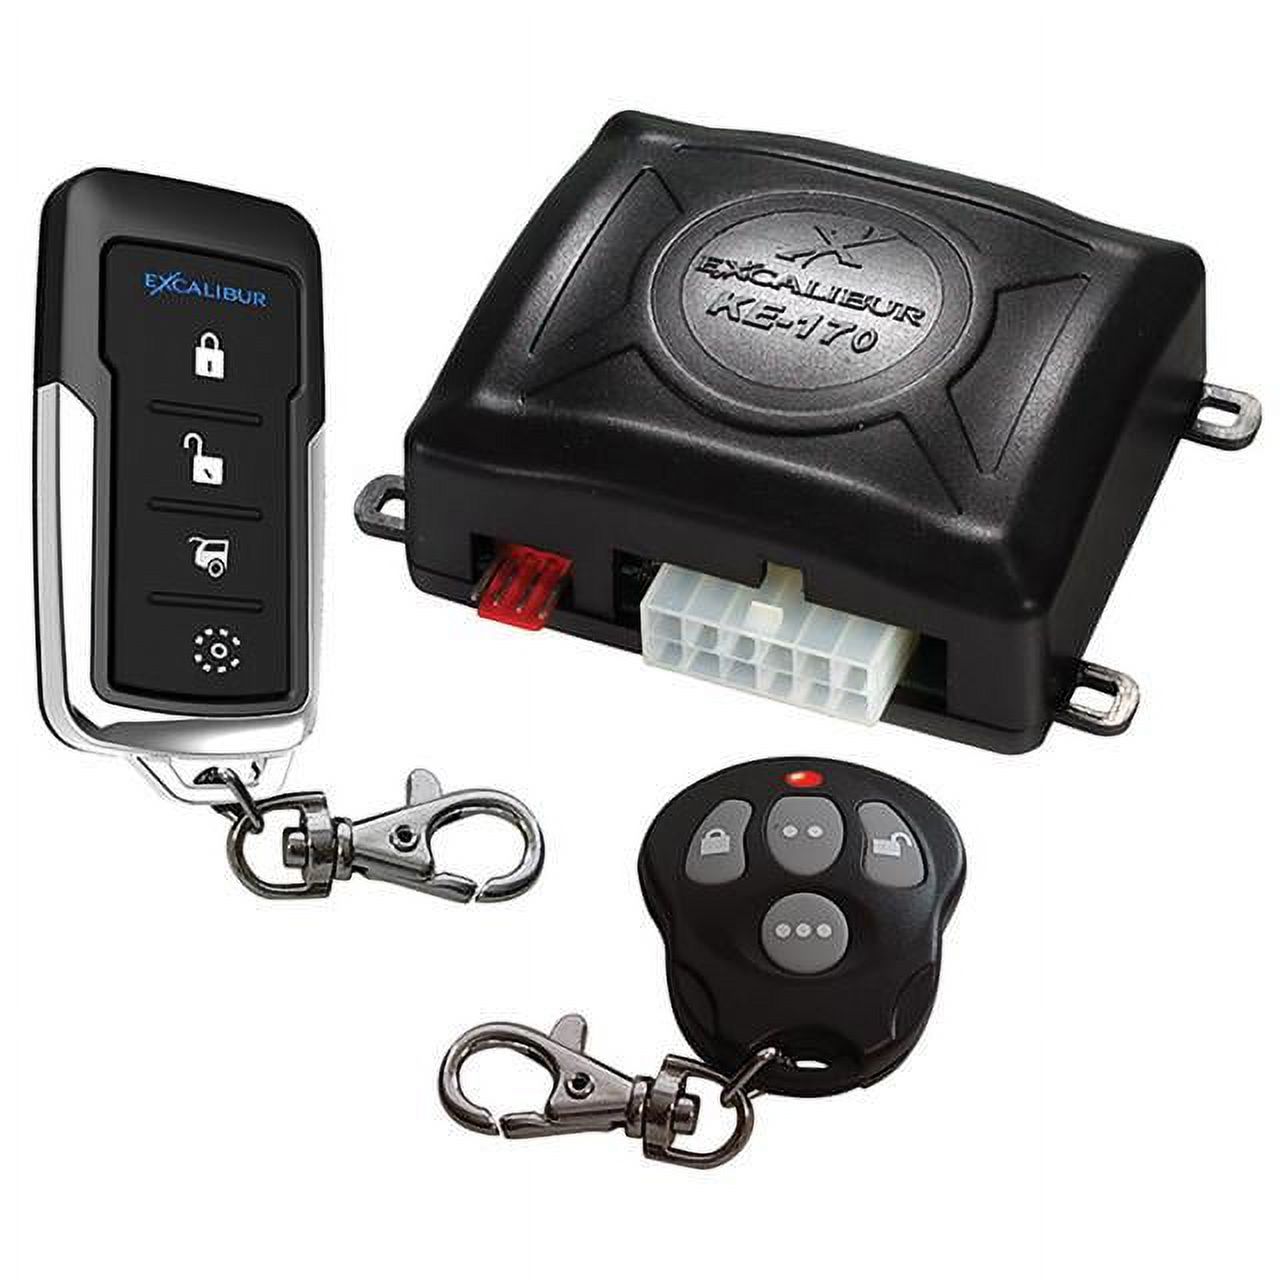 Excalibur Ke170 Keyless Car Alarm - image 1 of 5